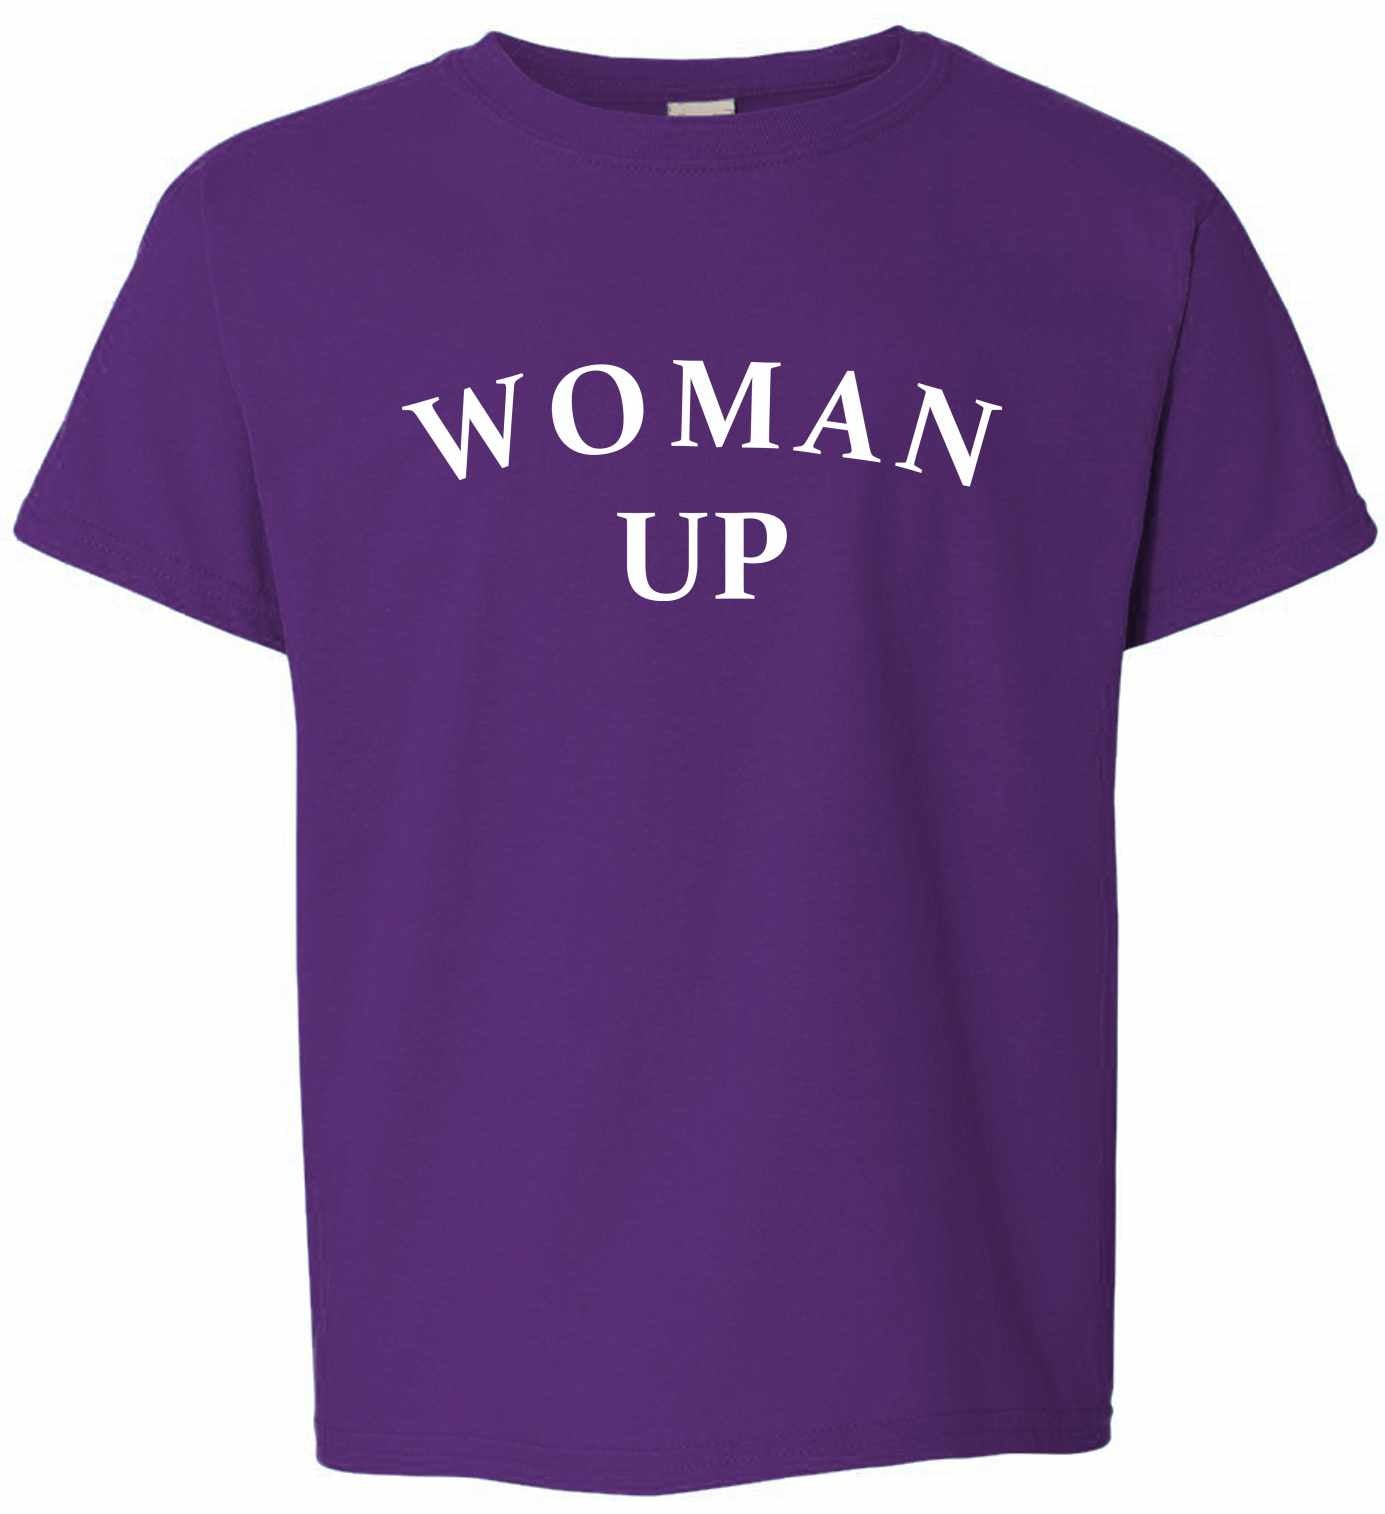 Woman Up on Kids T-Shirt